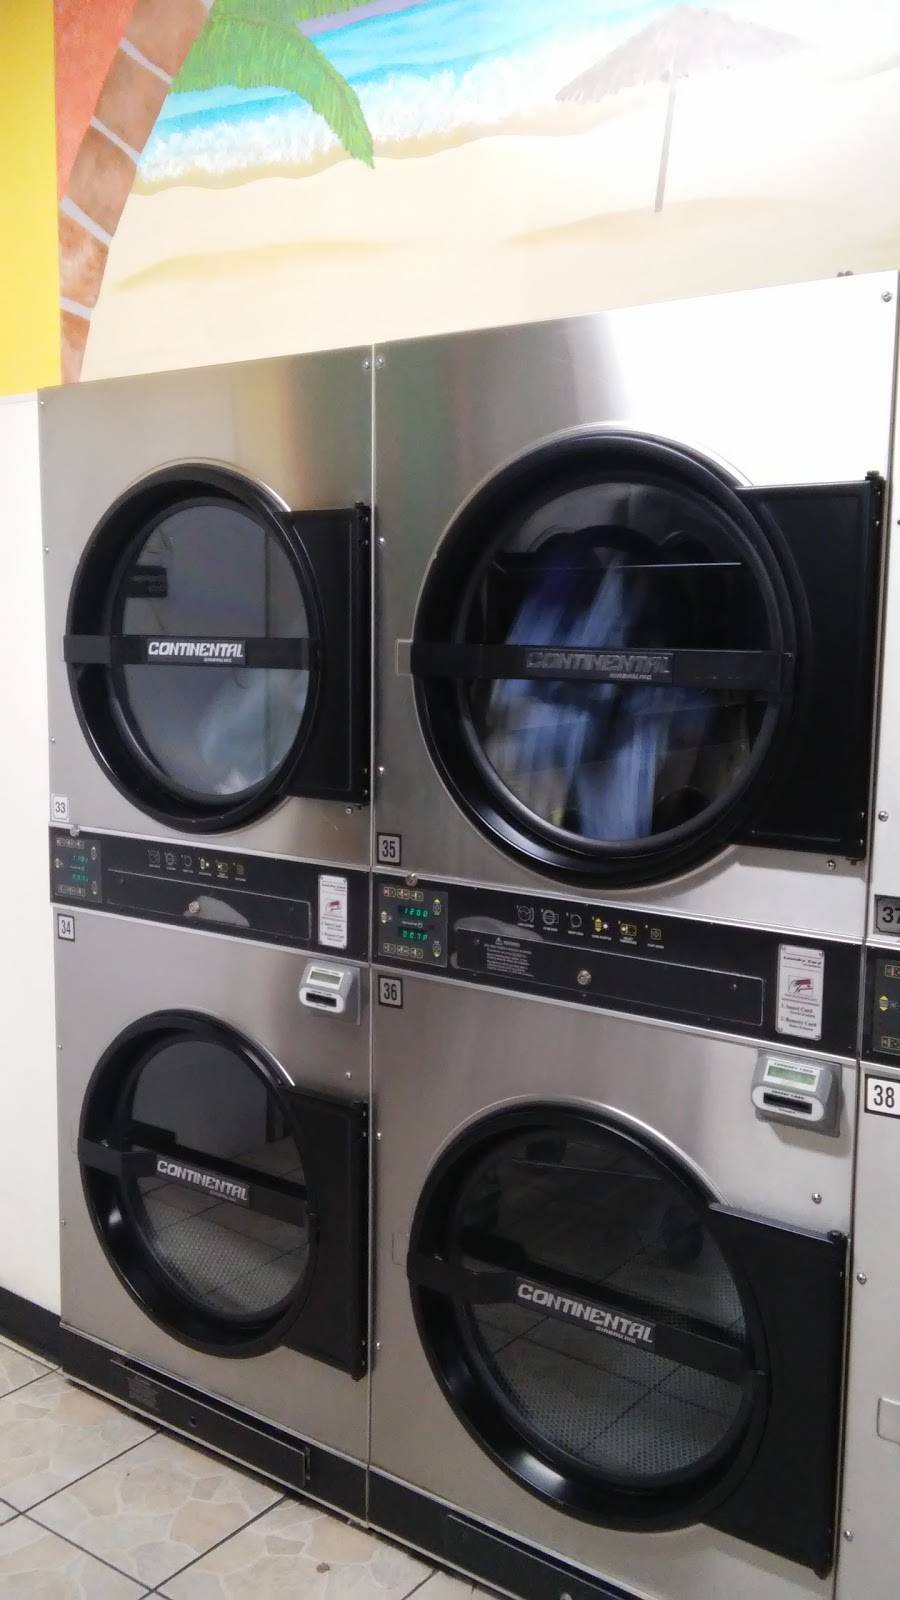 Sparklean Laundry: Laundromat & Wash,Dry,Fold Service | 1135 Columbus St, Bakersfield, CA 93305, USA | Phone: (661) 361-8090